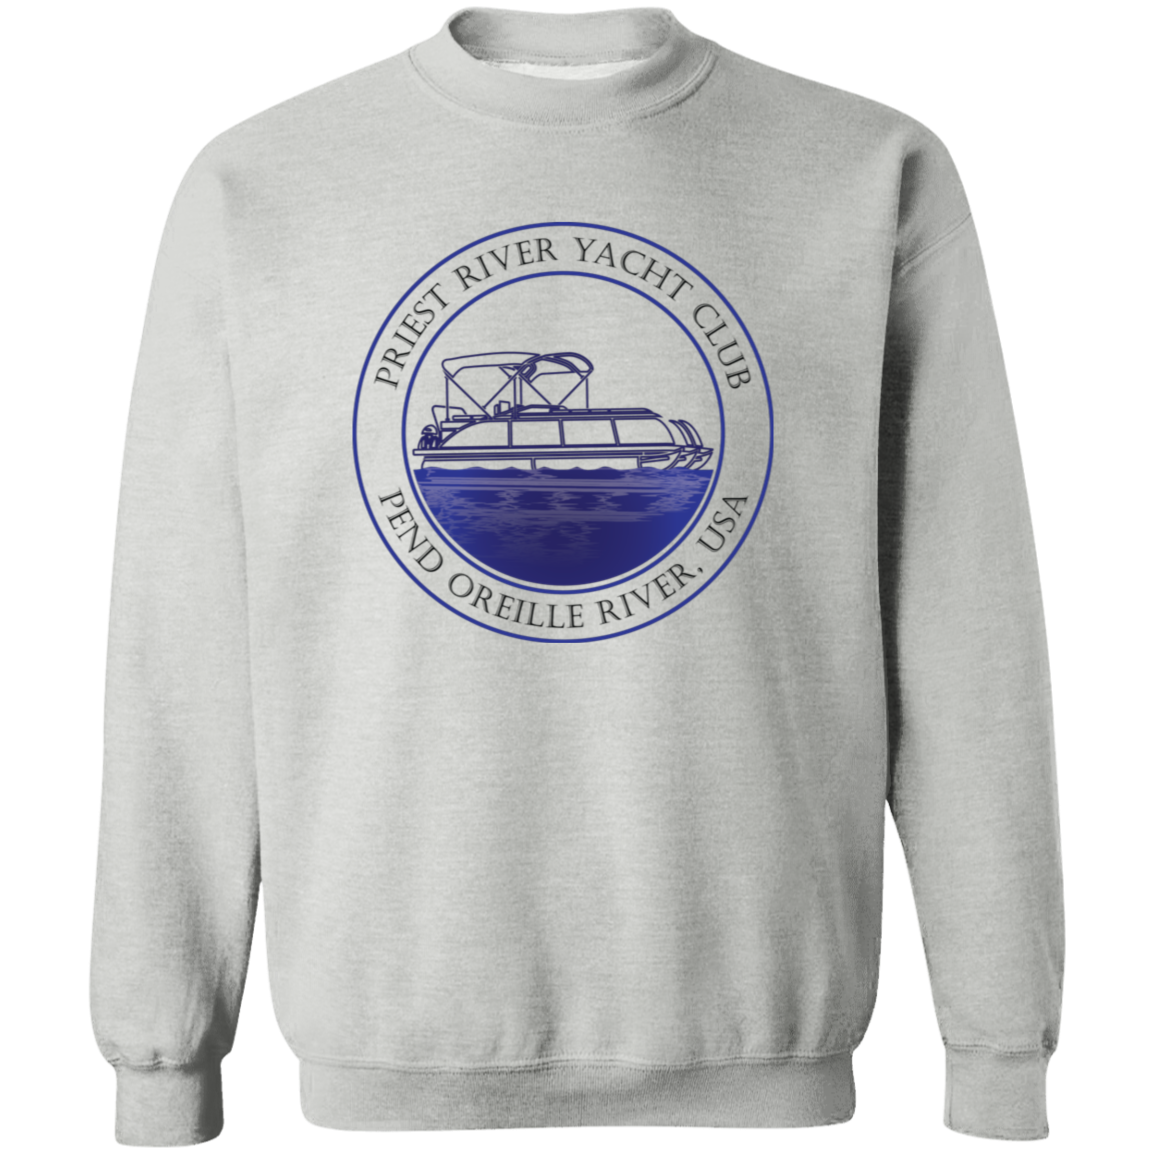 Priest River Yacht Club - Sweatshirt